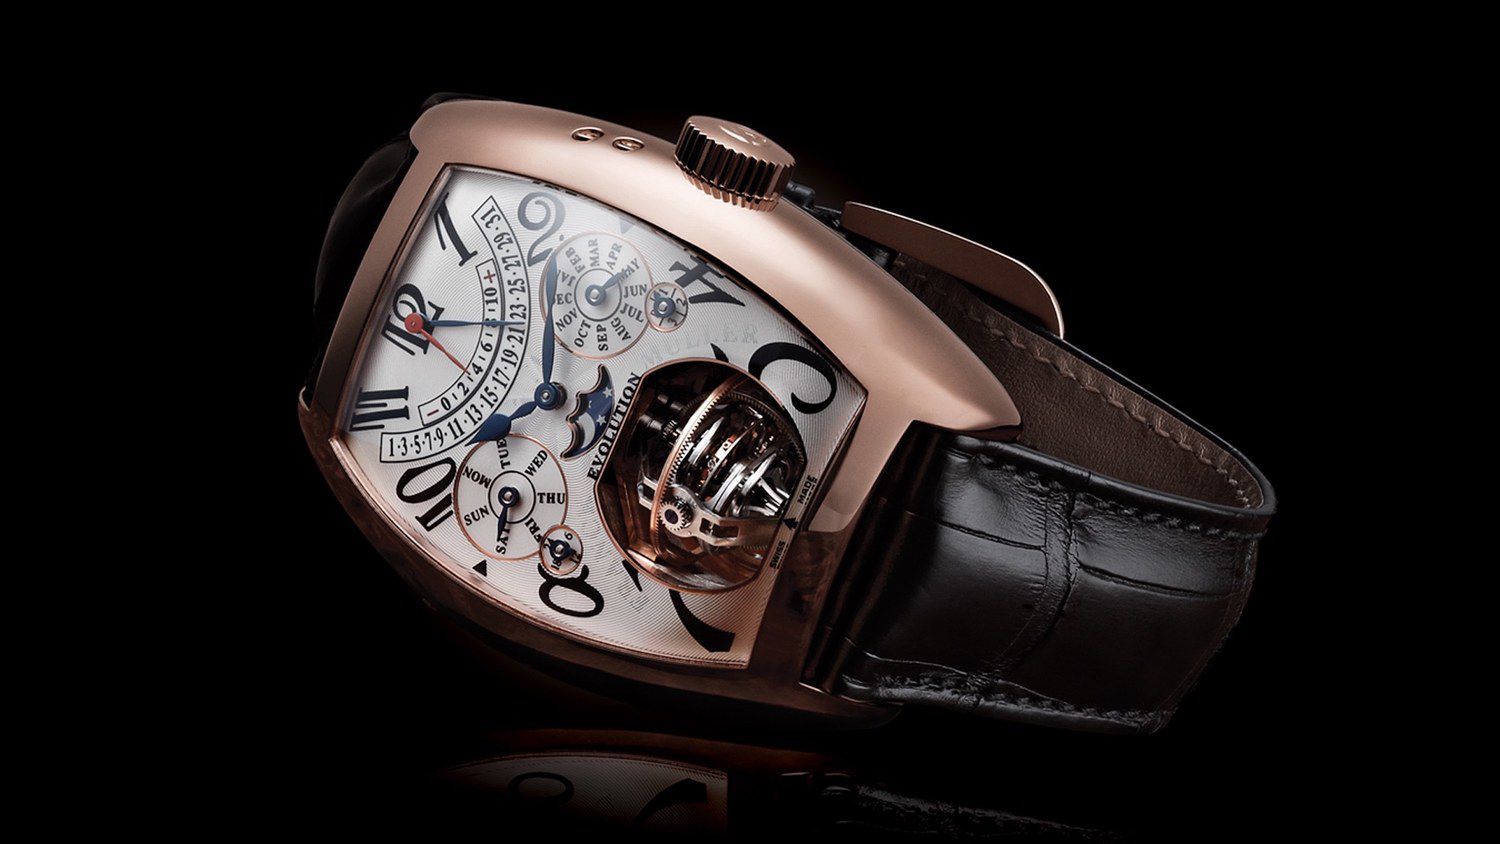 Đồng hồ Franck Muller chất lượng cao